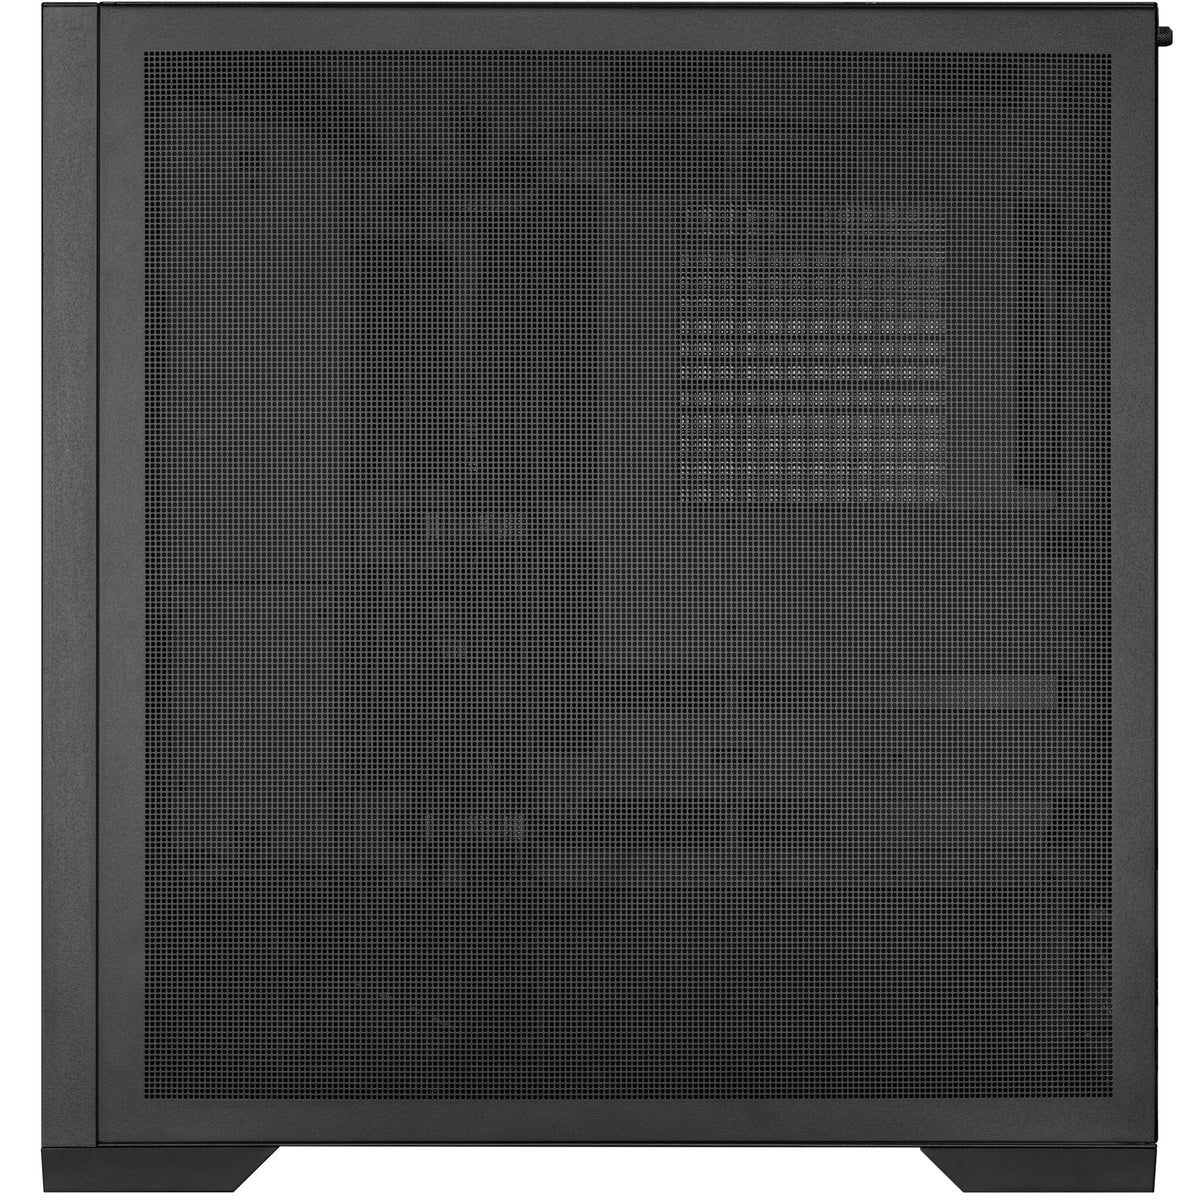 Asus TUF Gaming GT302 ARGB - ATX Mid Tower Case in Black